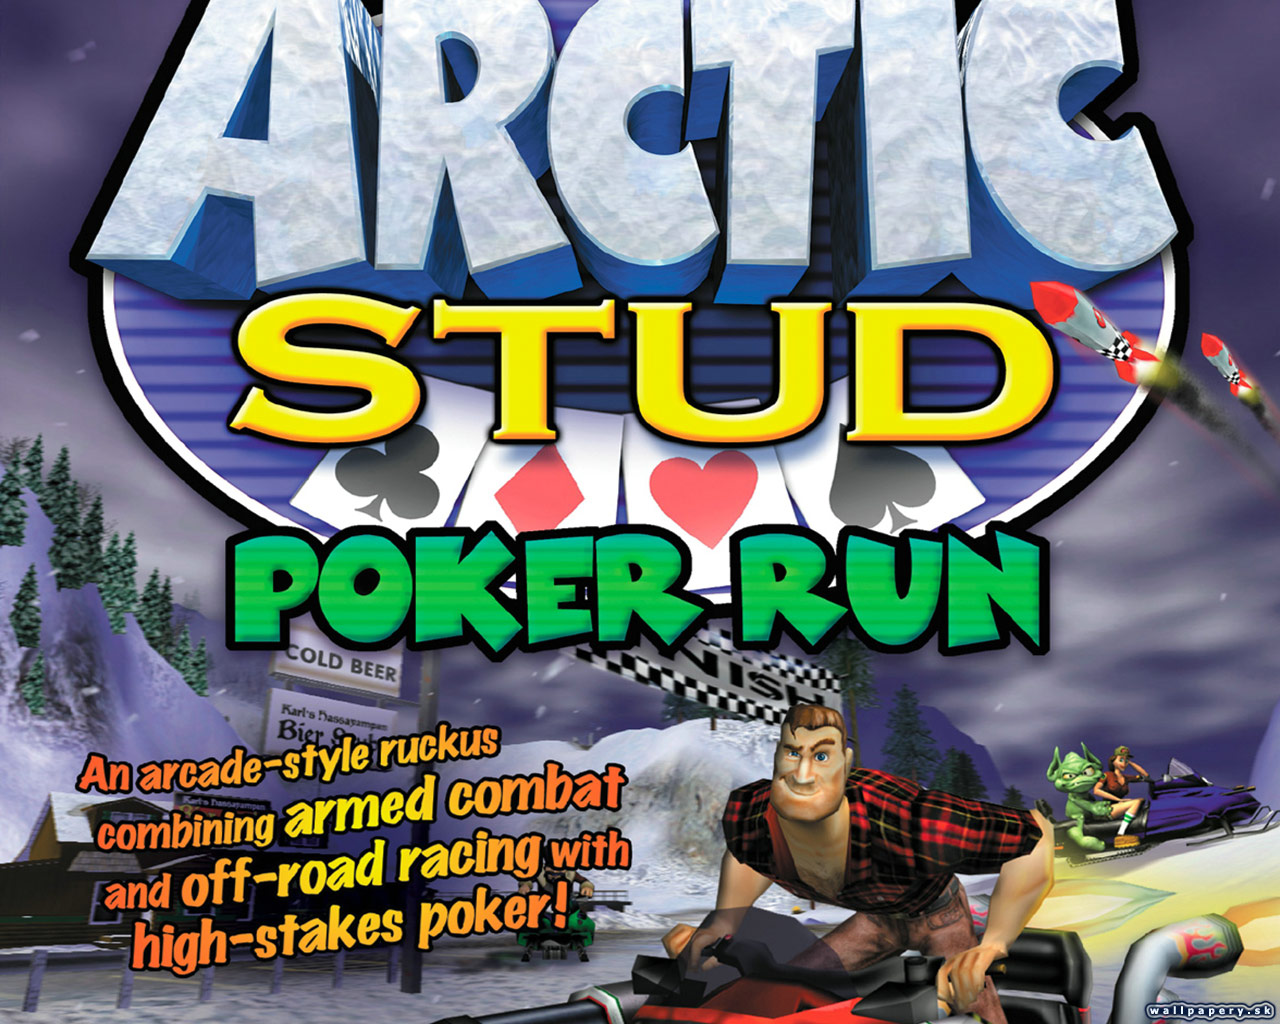 Arctic Stud Poker Run - wallpaper 7